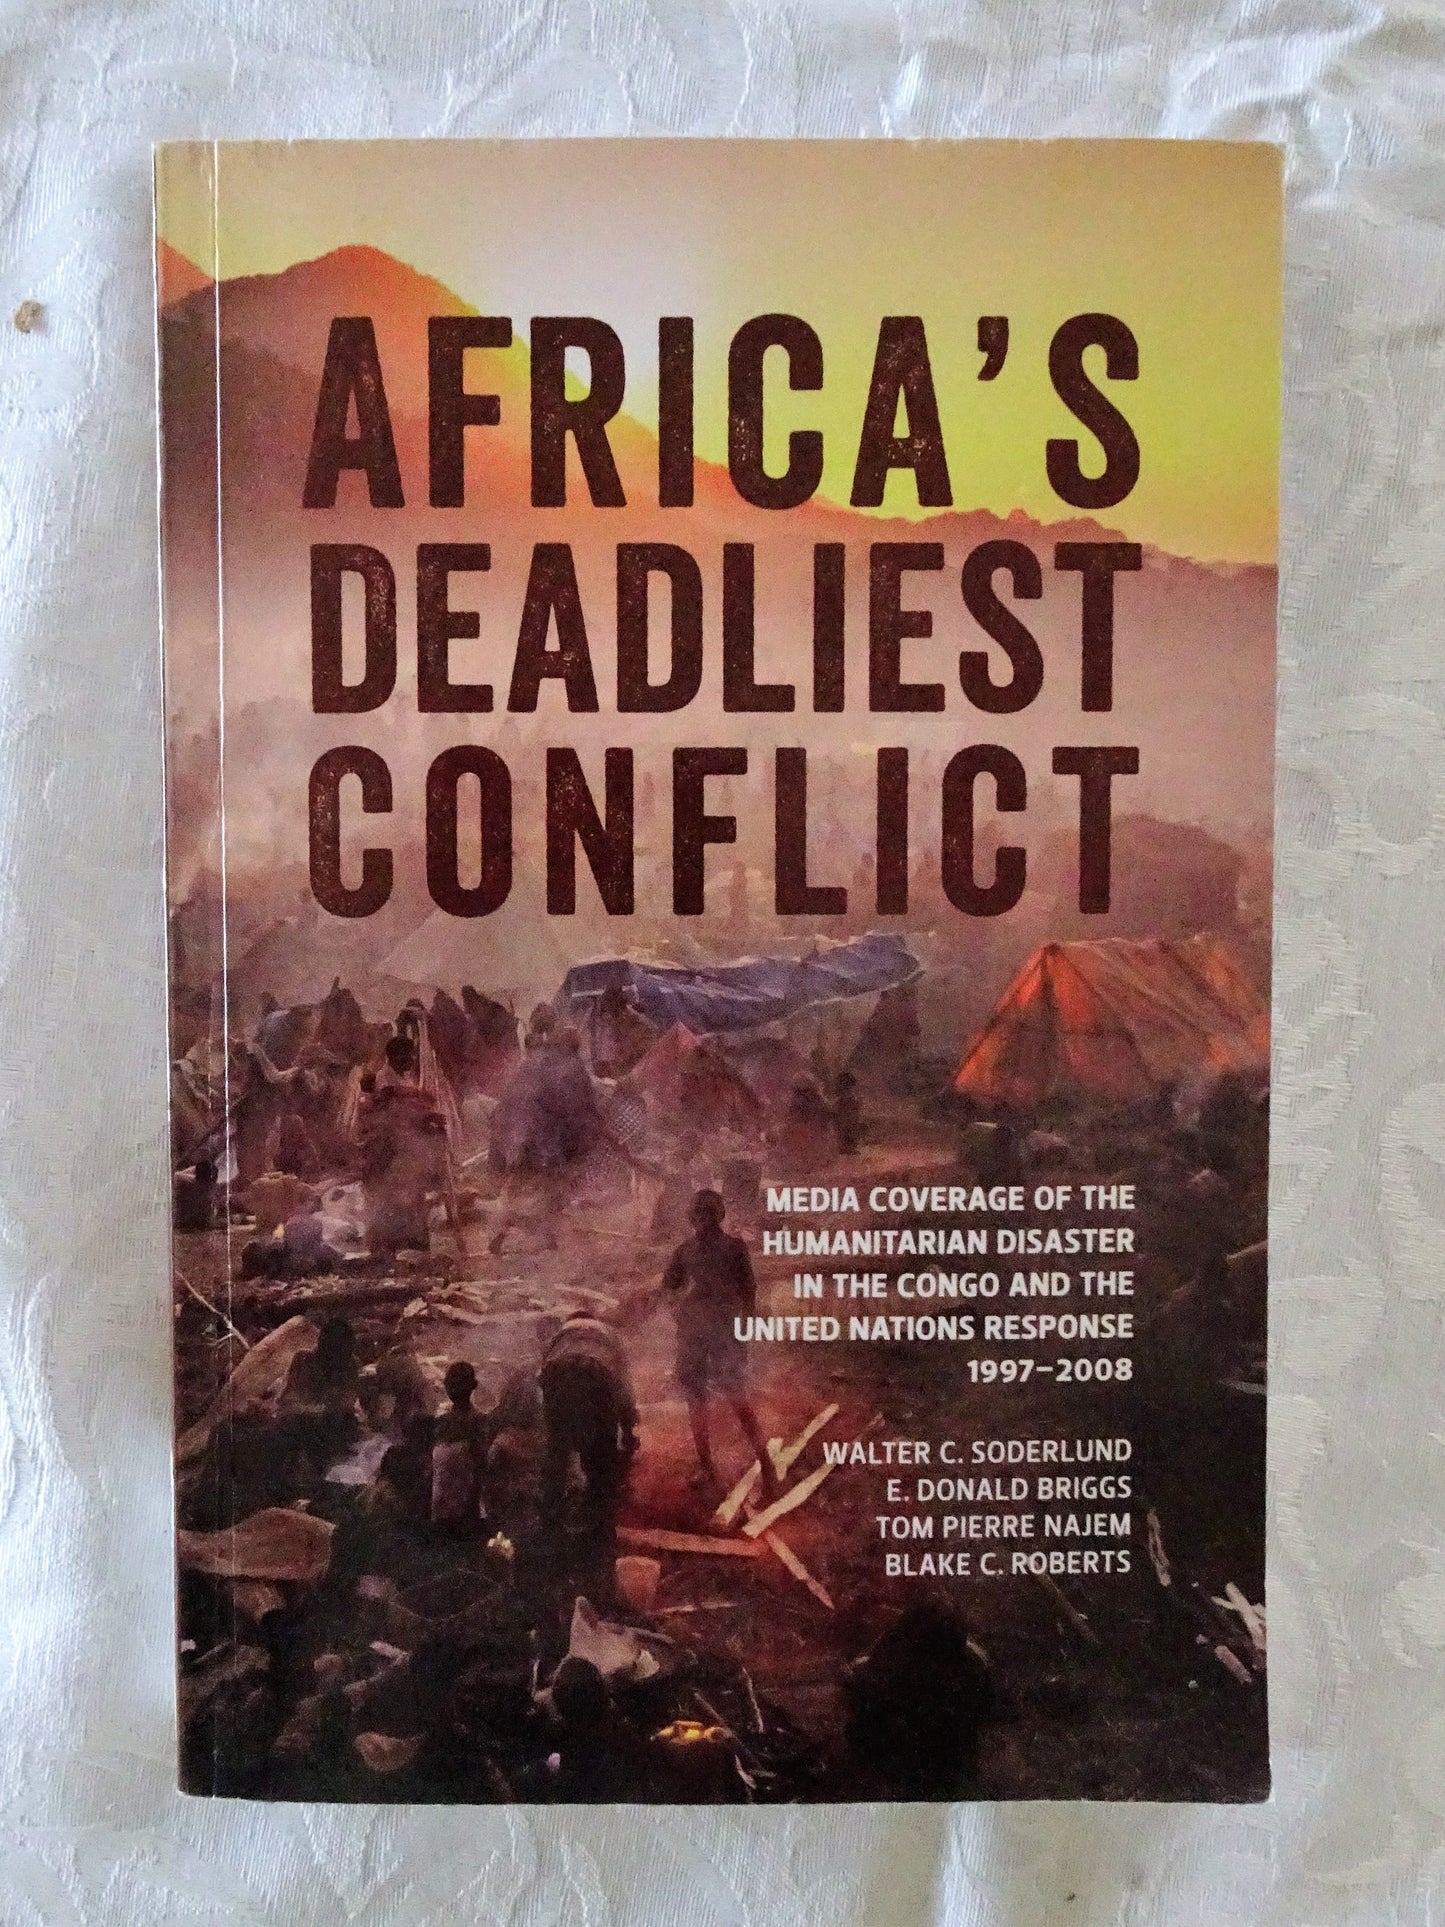 Africa's Deadliest Conflict by Walter C. Doderlund et al.